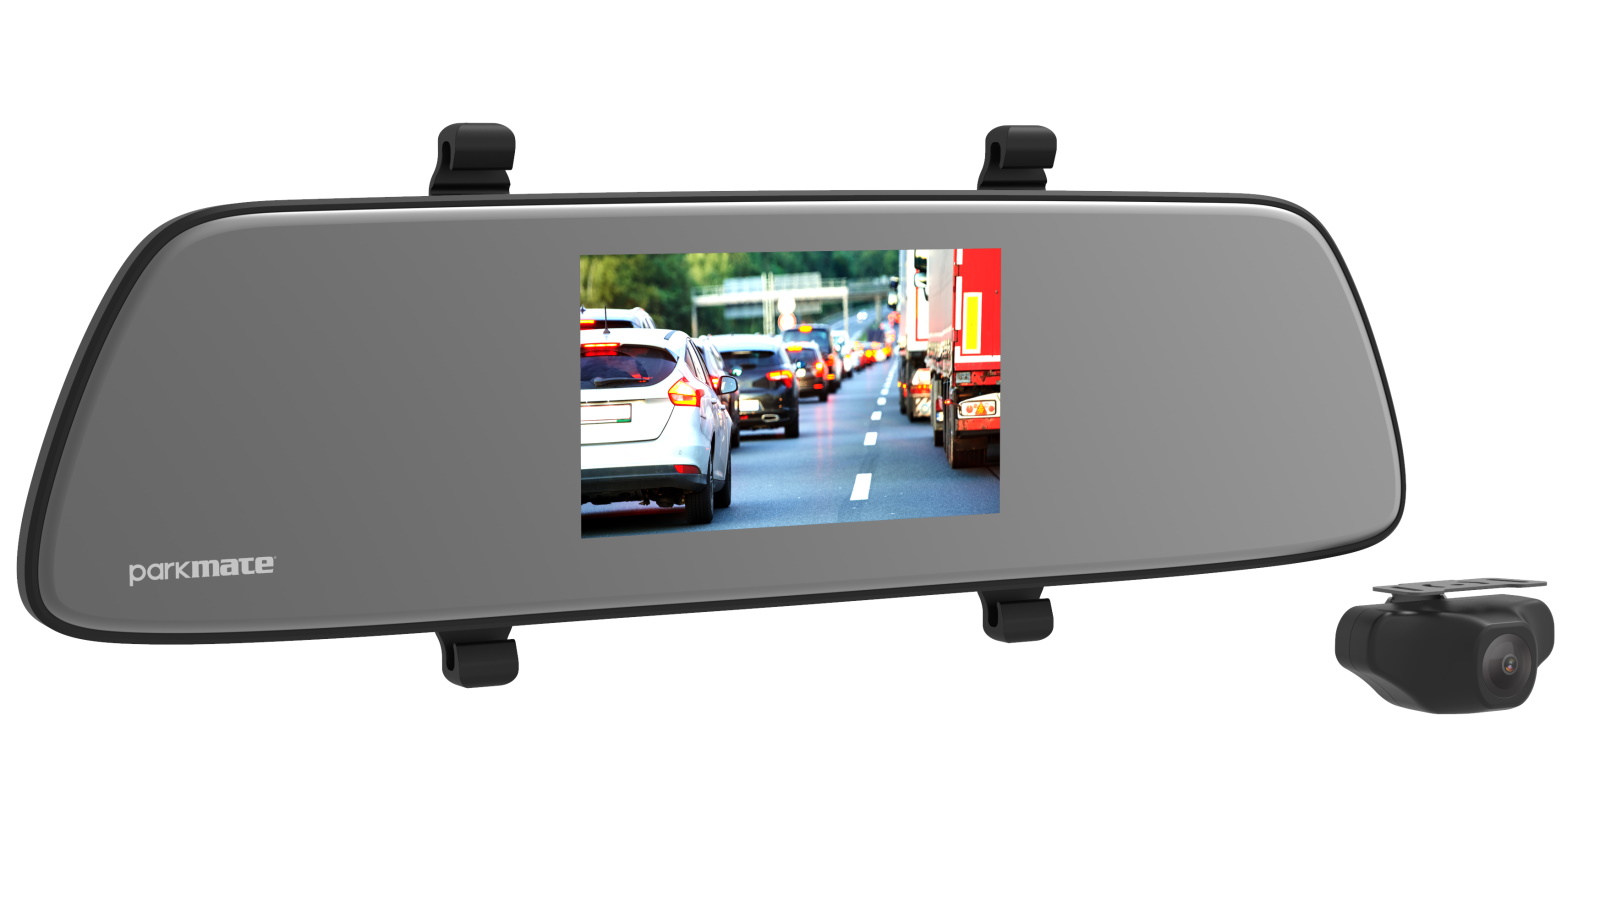 https://hnau.imgix.net/media/catalog/product/m/c/mcpk-502dvr-parkmate-touch-screen-dvr-mirror.jpg